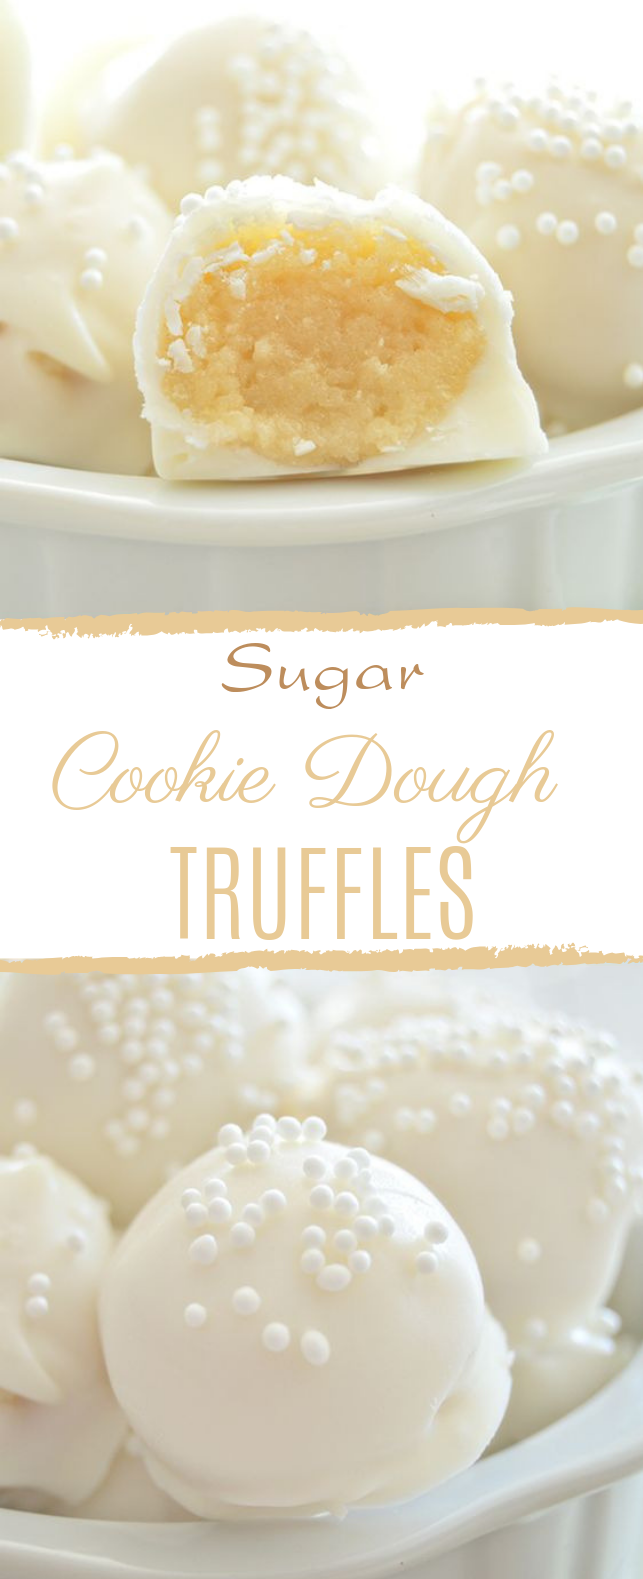 Sugar Cookie Dough Truffles #delicious #dessert